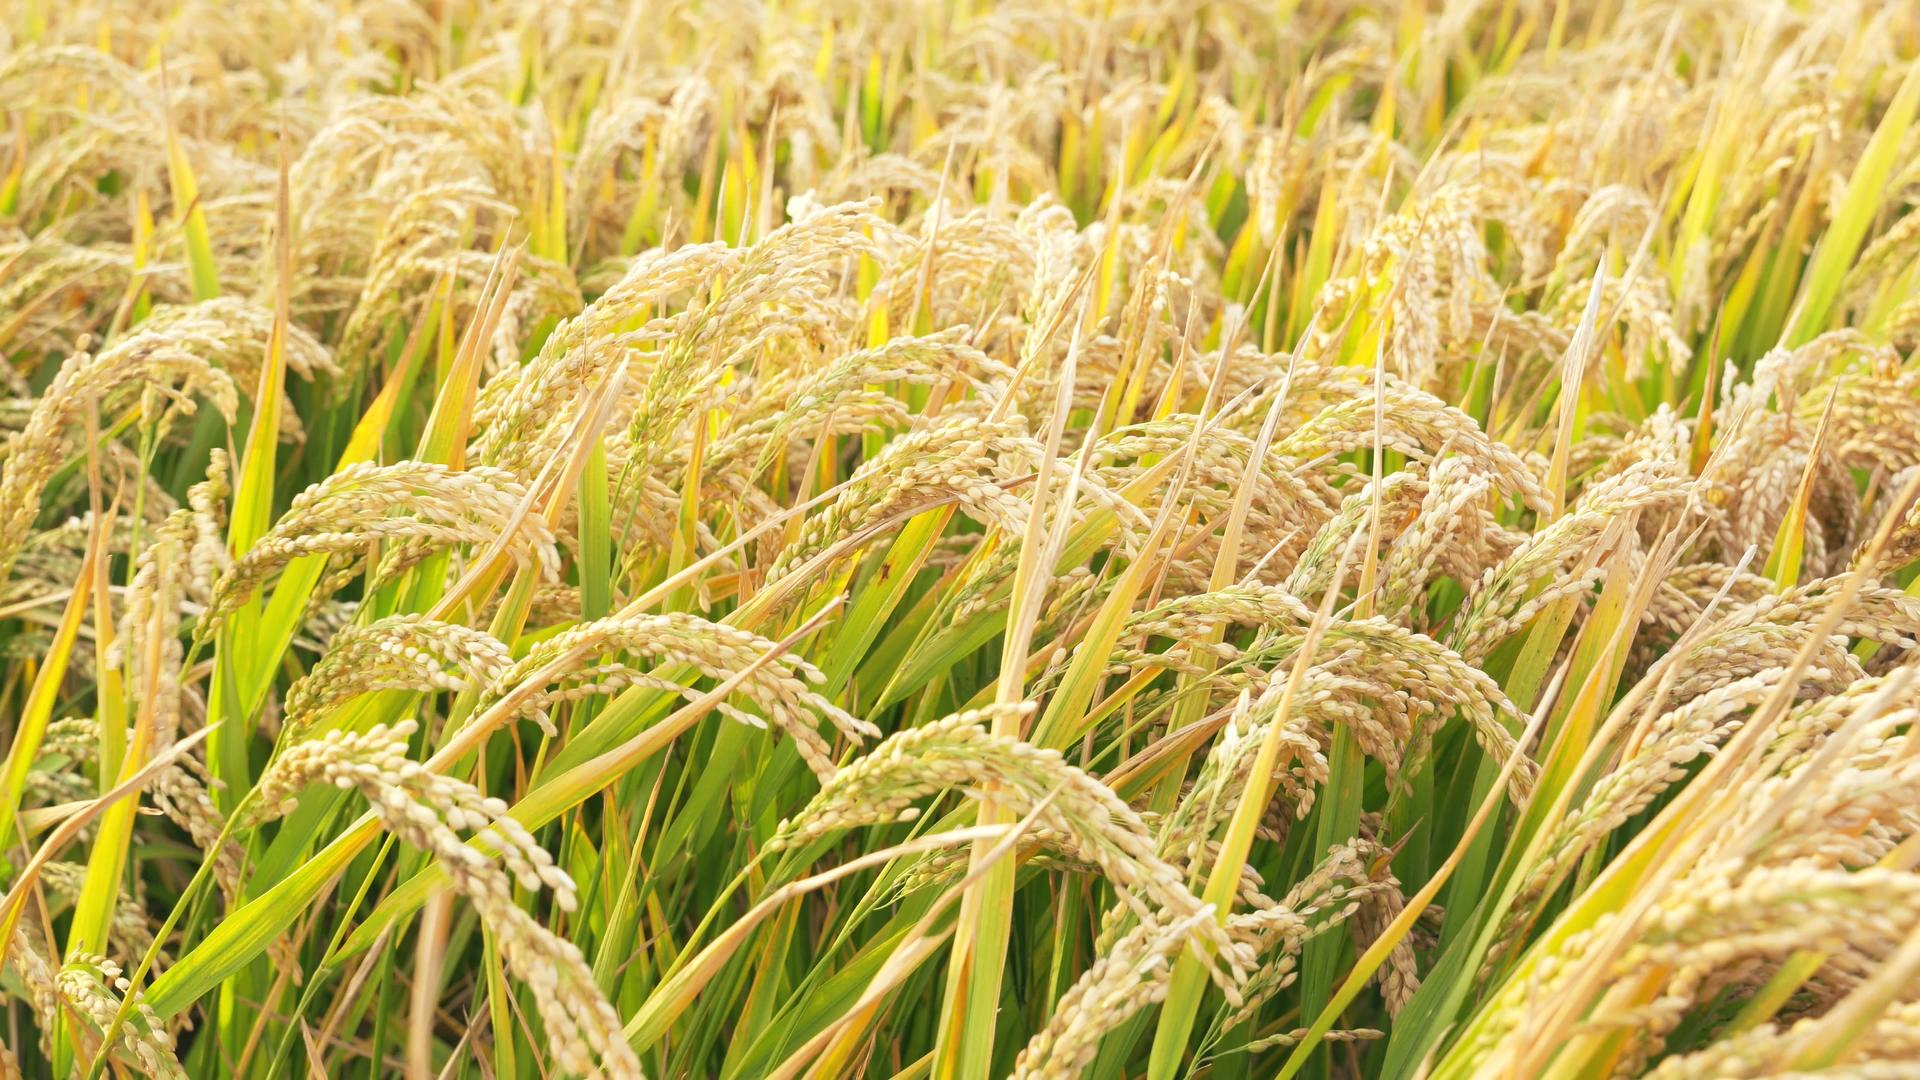 4K田地丰收秋季农业粮食水稻视频的预览图